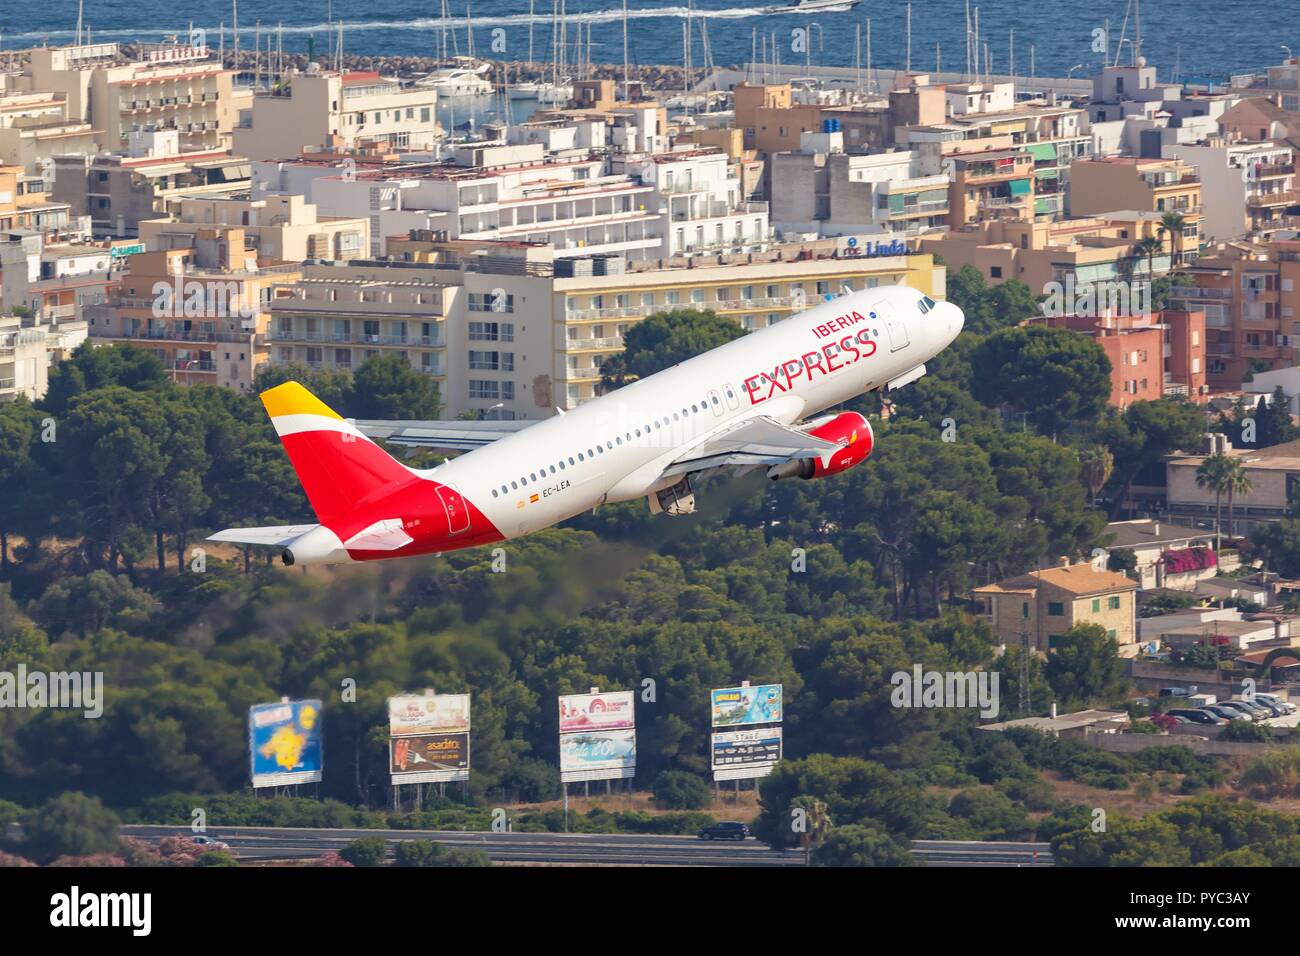 Palma de Mallorca, Spain - July 21, 2018: Aerial photo of an Iberia Express Airbus A320 airplane at Palma de Mallorca airport in Spain. | usage worldwide Stock Photo